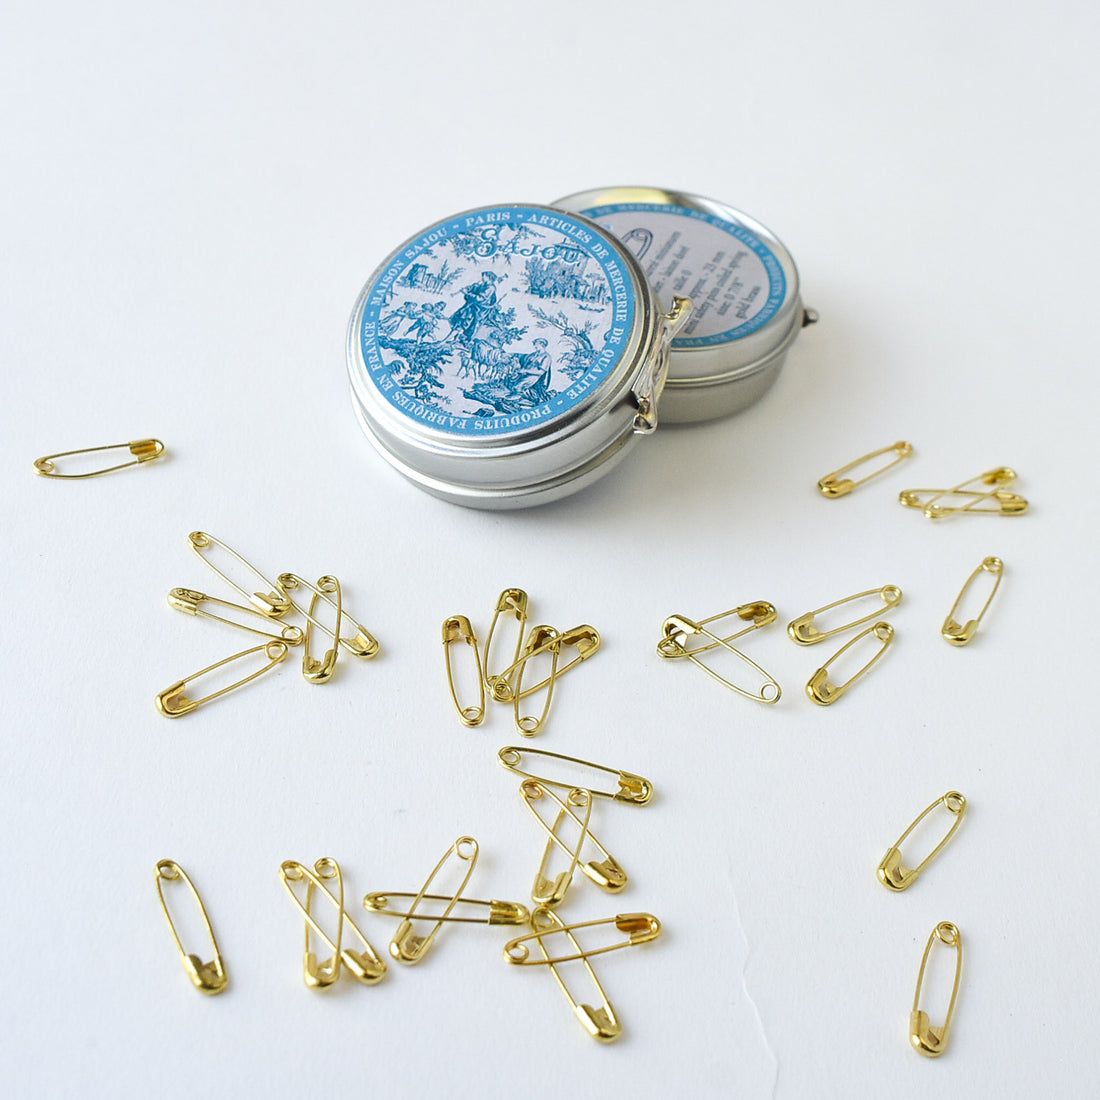 Miniature Safety Pins